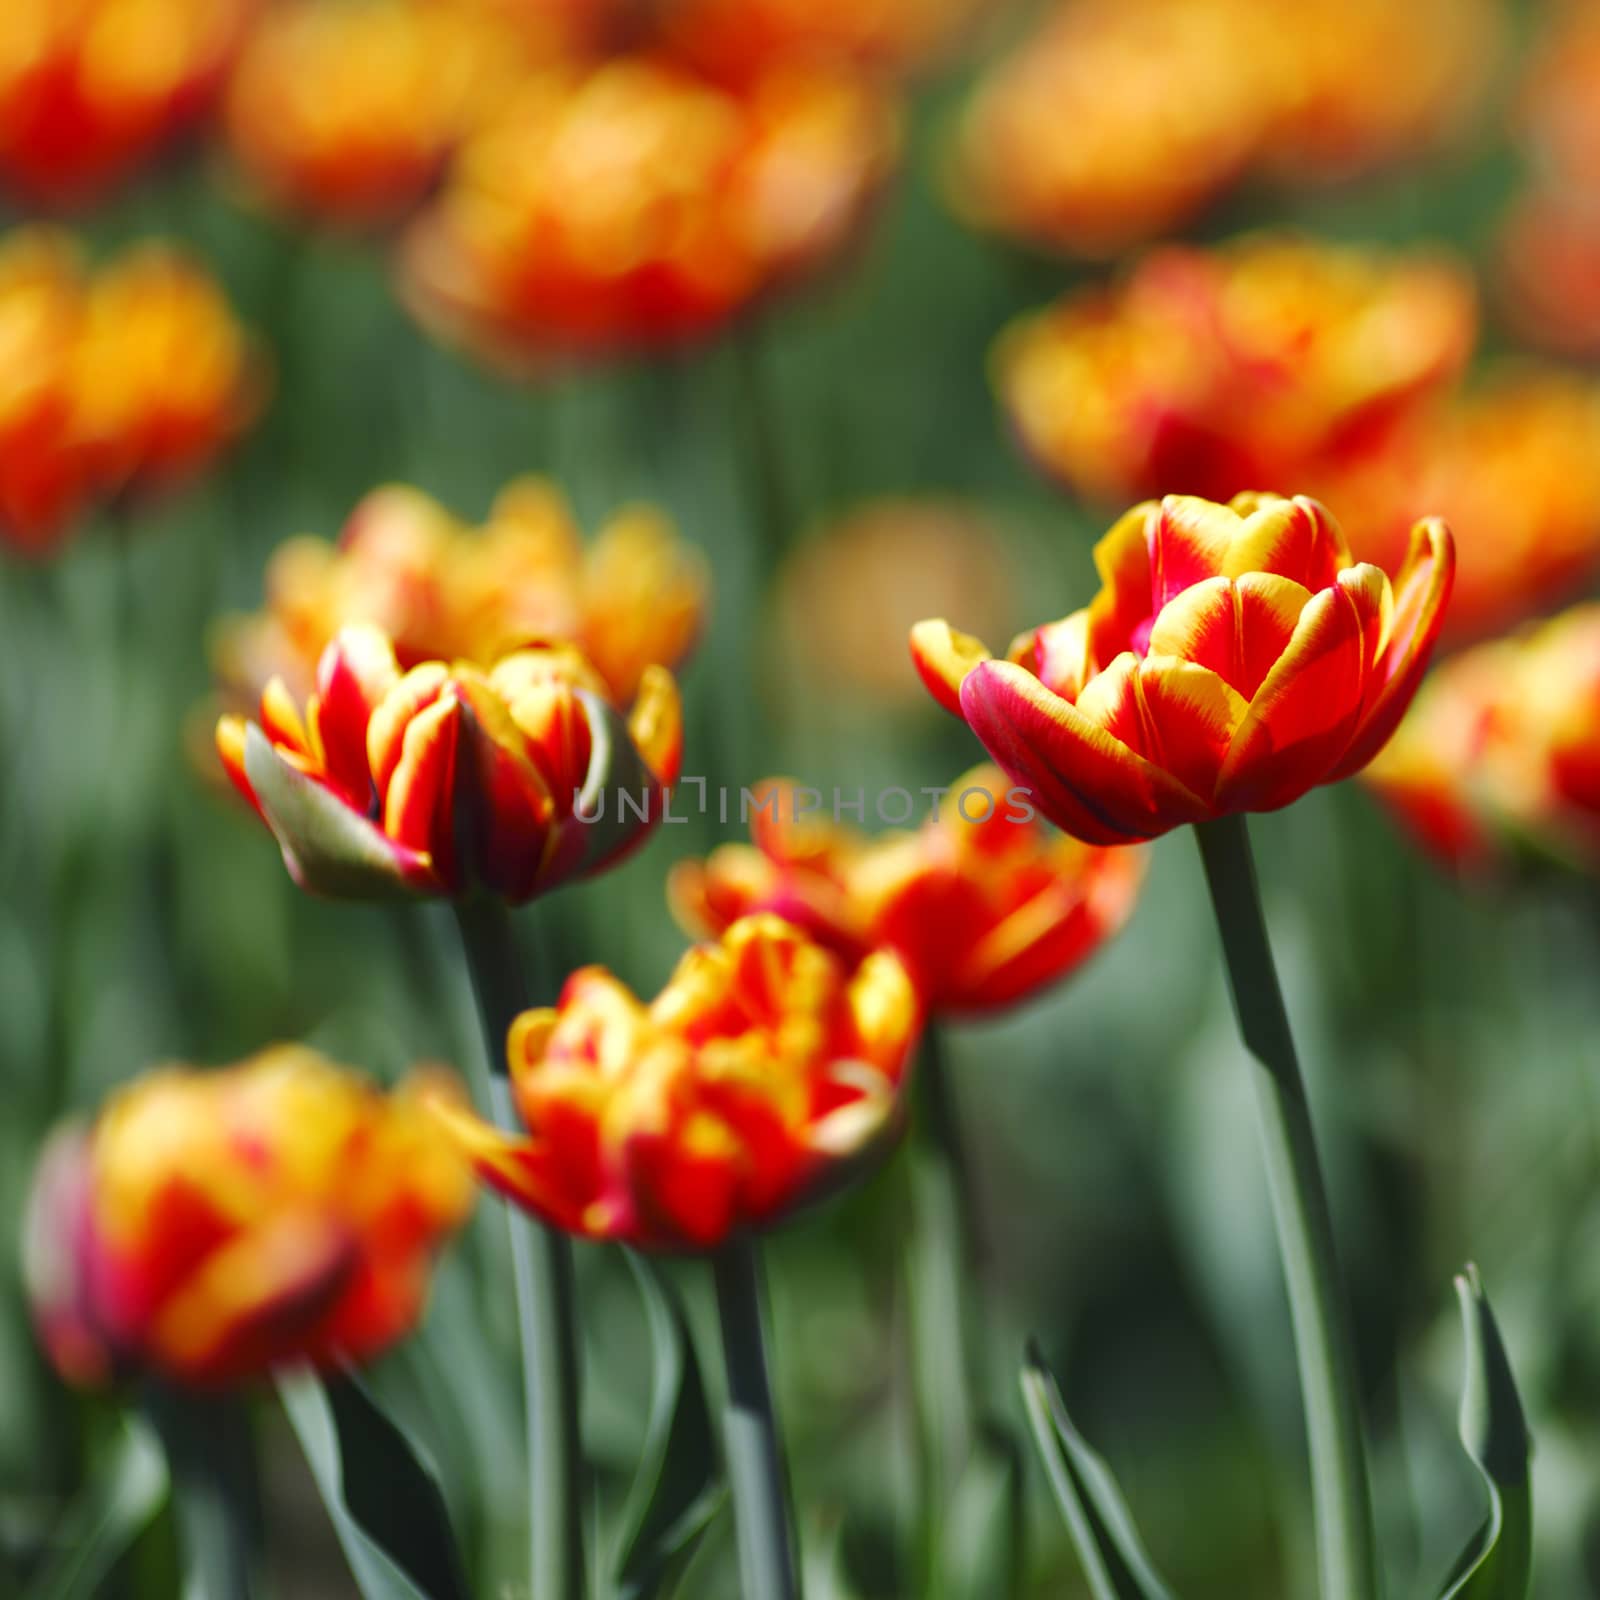 Red Orange Yellow Tulips by Yellowj